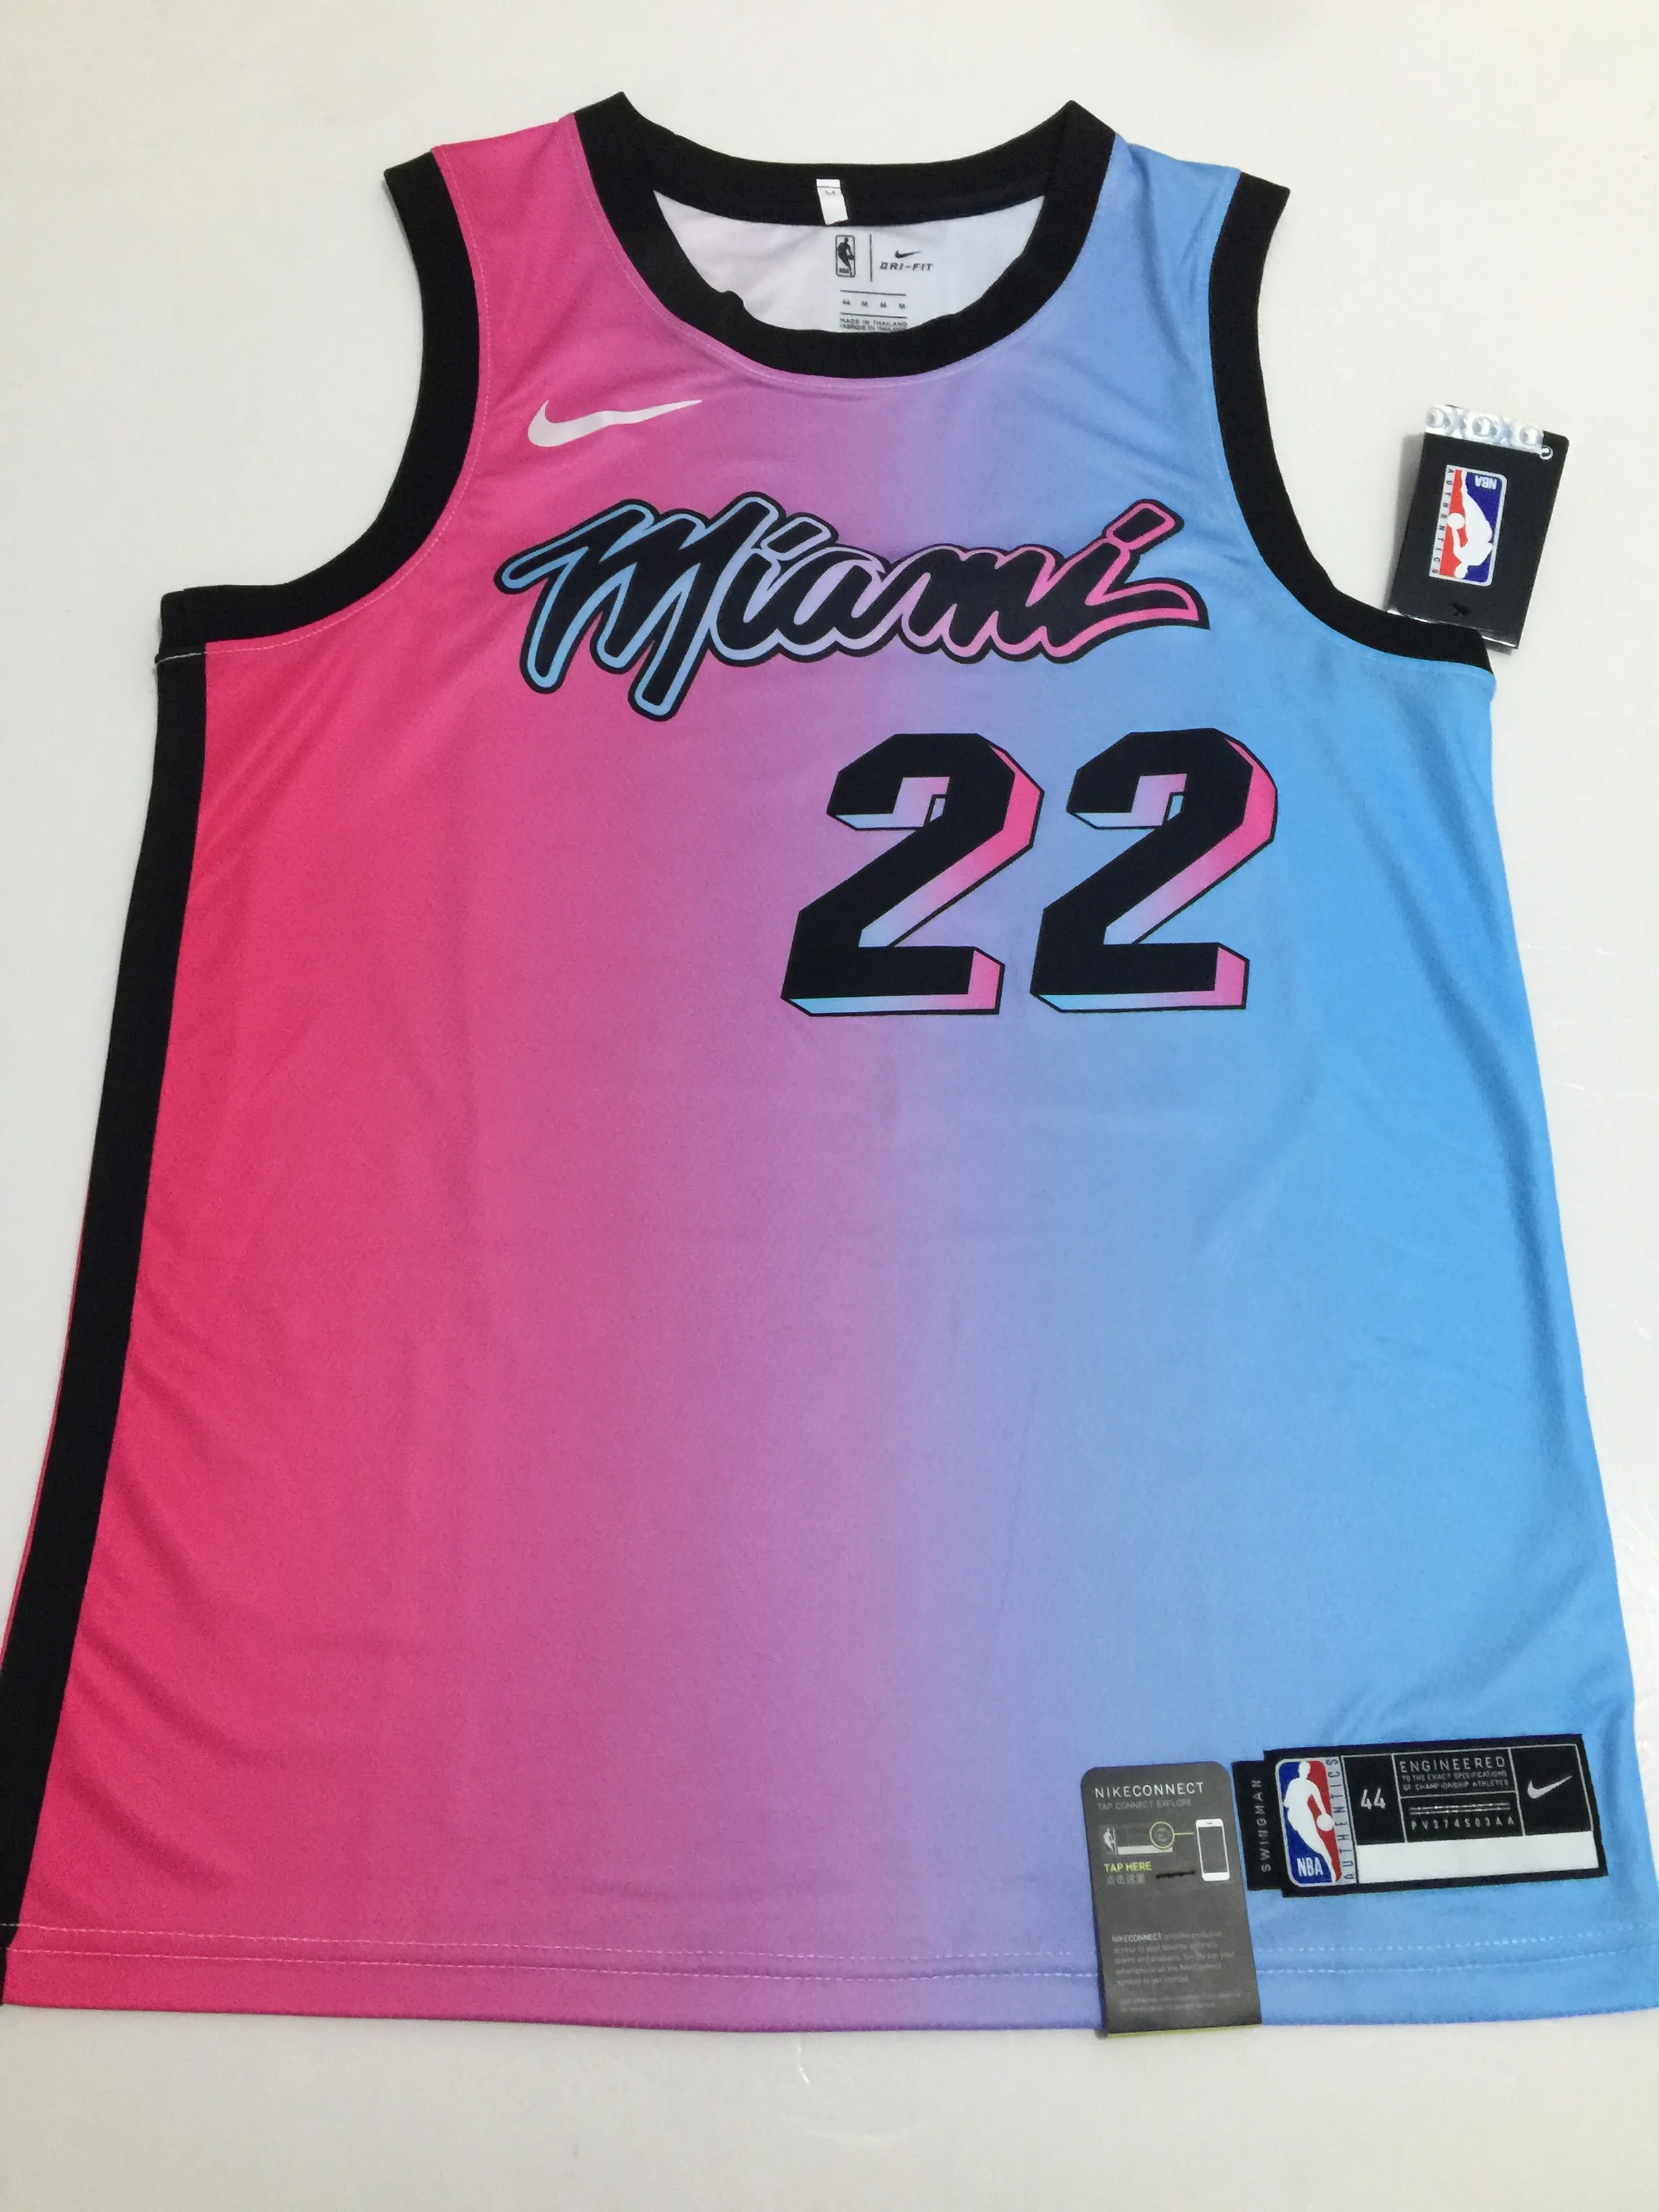 Nike Men's Miami Heat BAM Ado #13 Black Dri-Fit Swingman Jersey, Medium